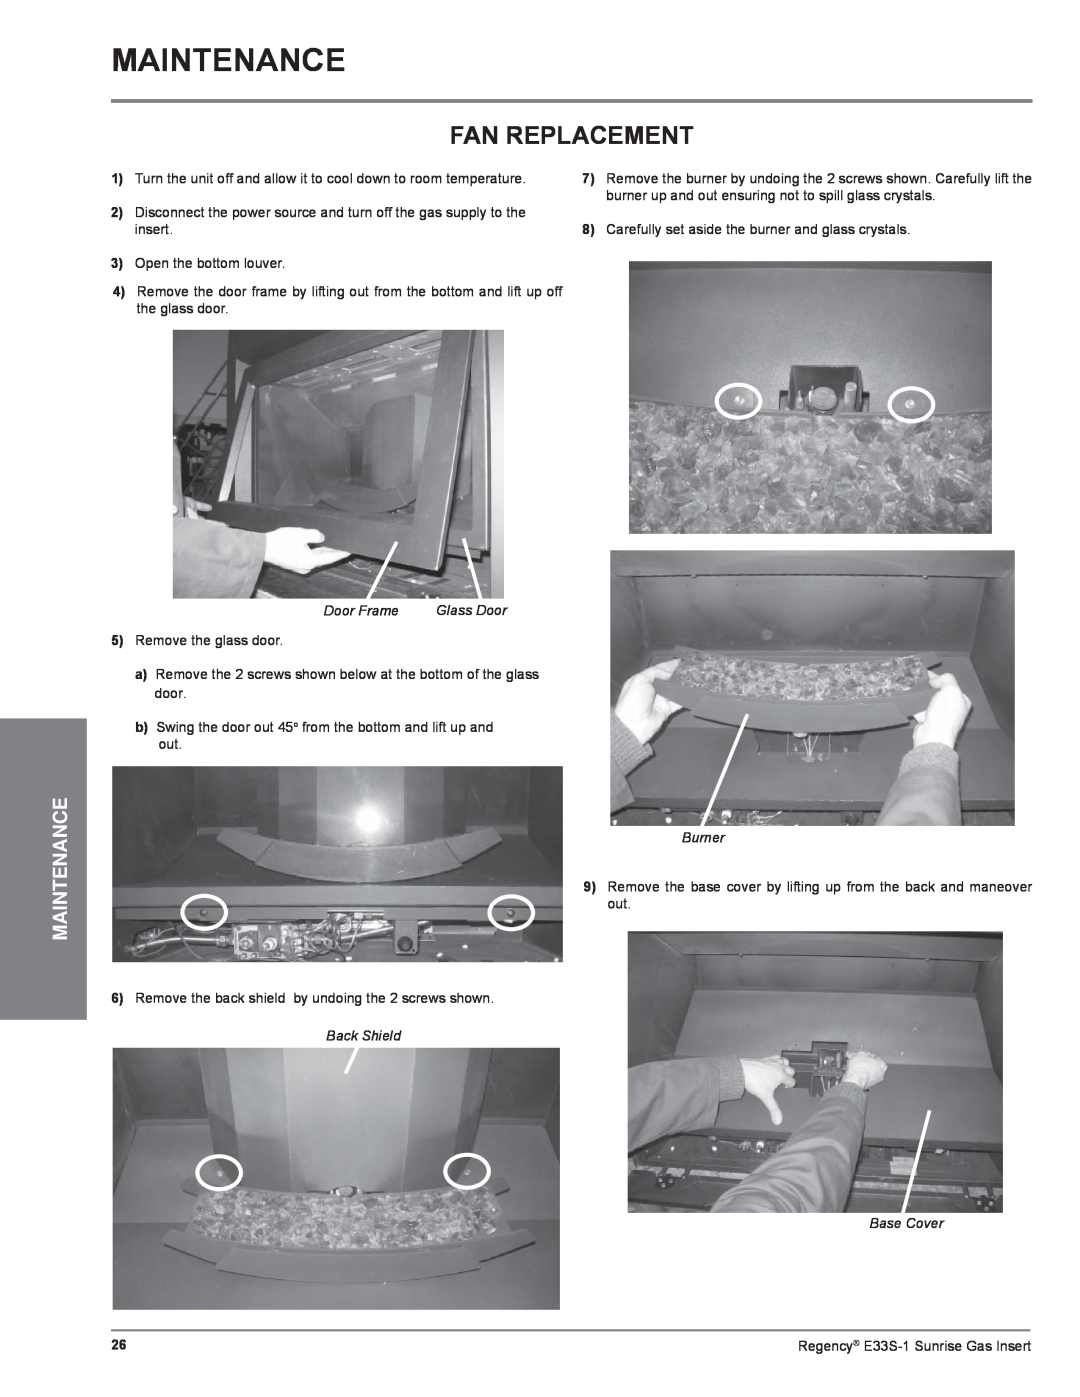 Regency E33S installation manual Maintenance, Fan Replacement, Door Frame, Burner, Base Cover 